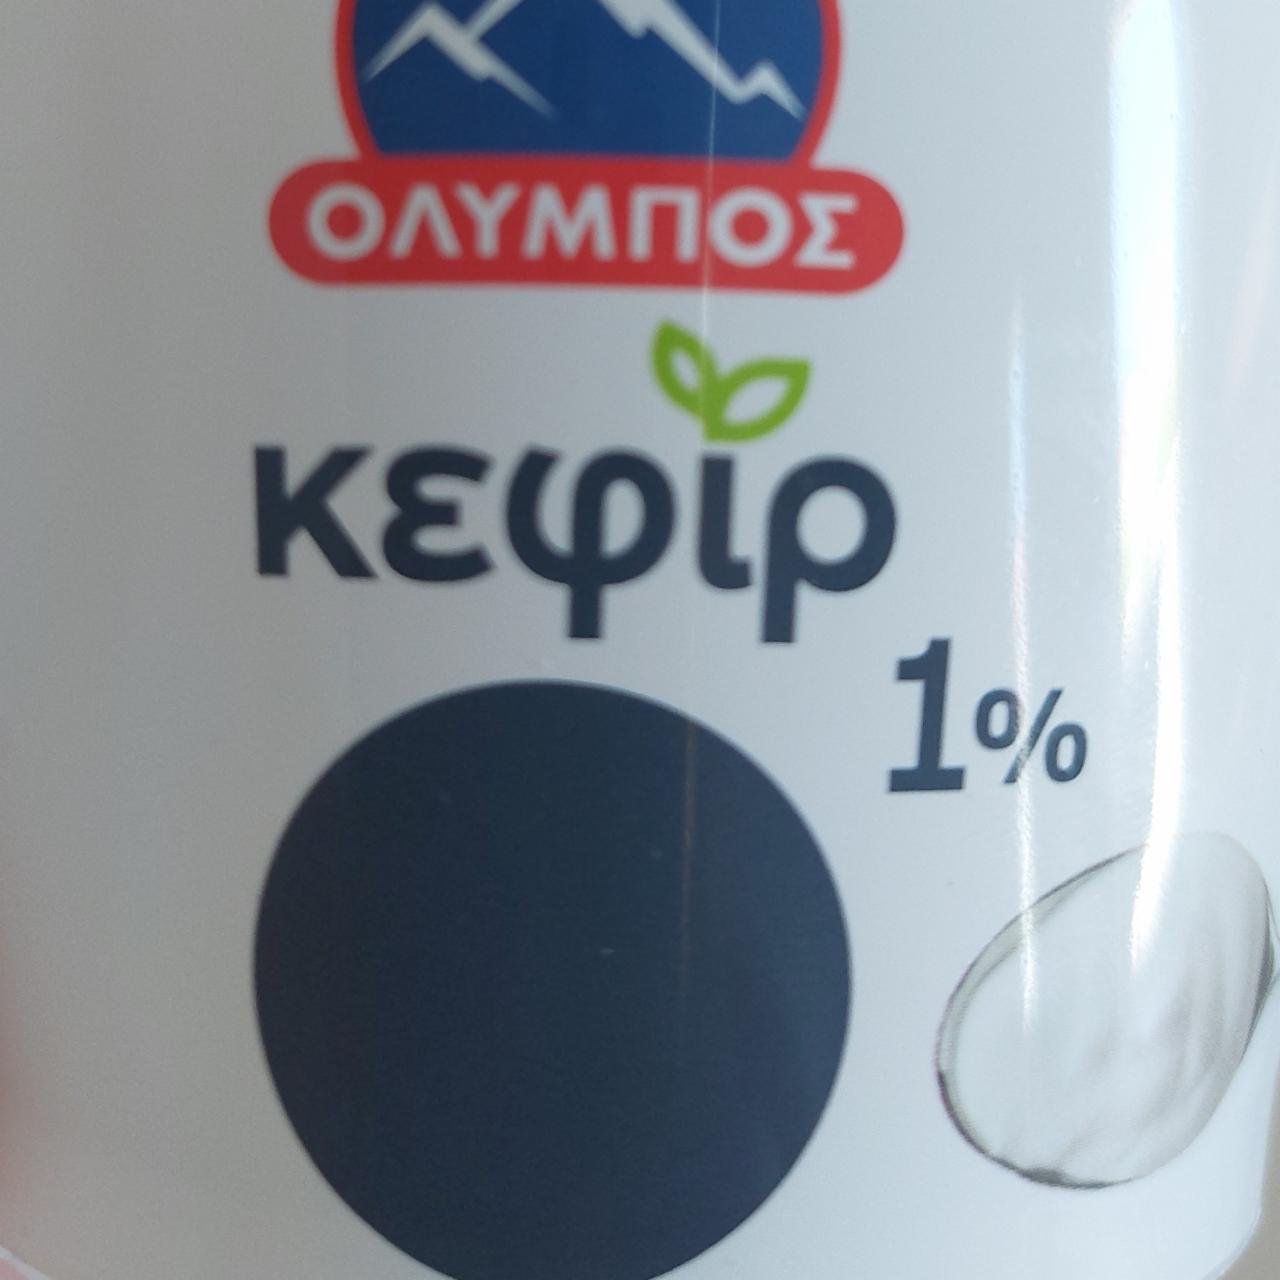 Fotografie - Jogurt bílý 1% Olympos